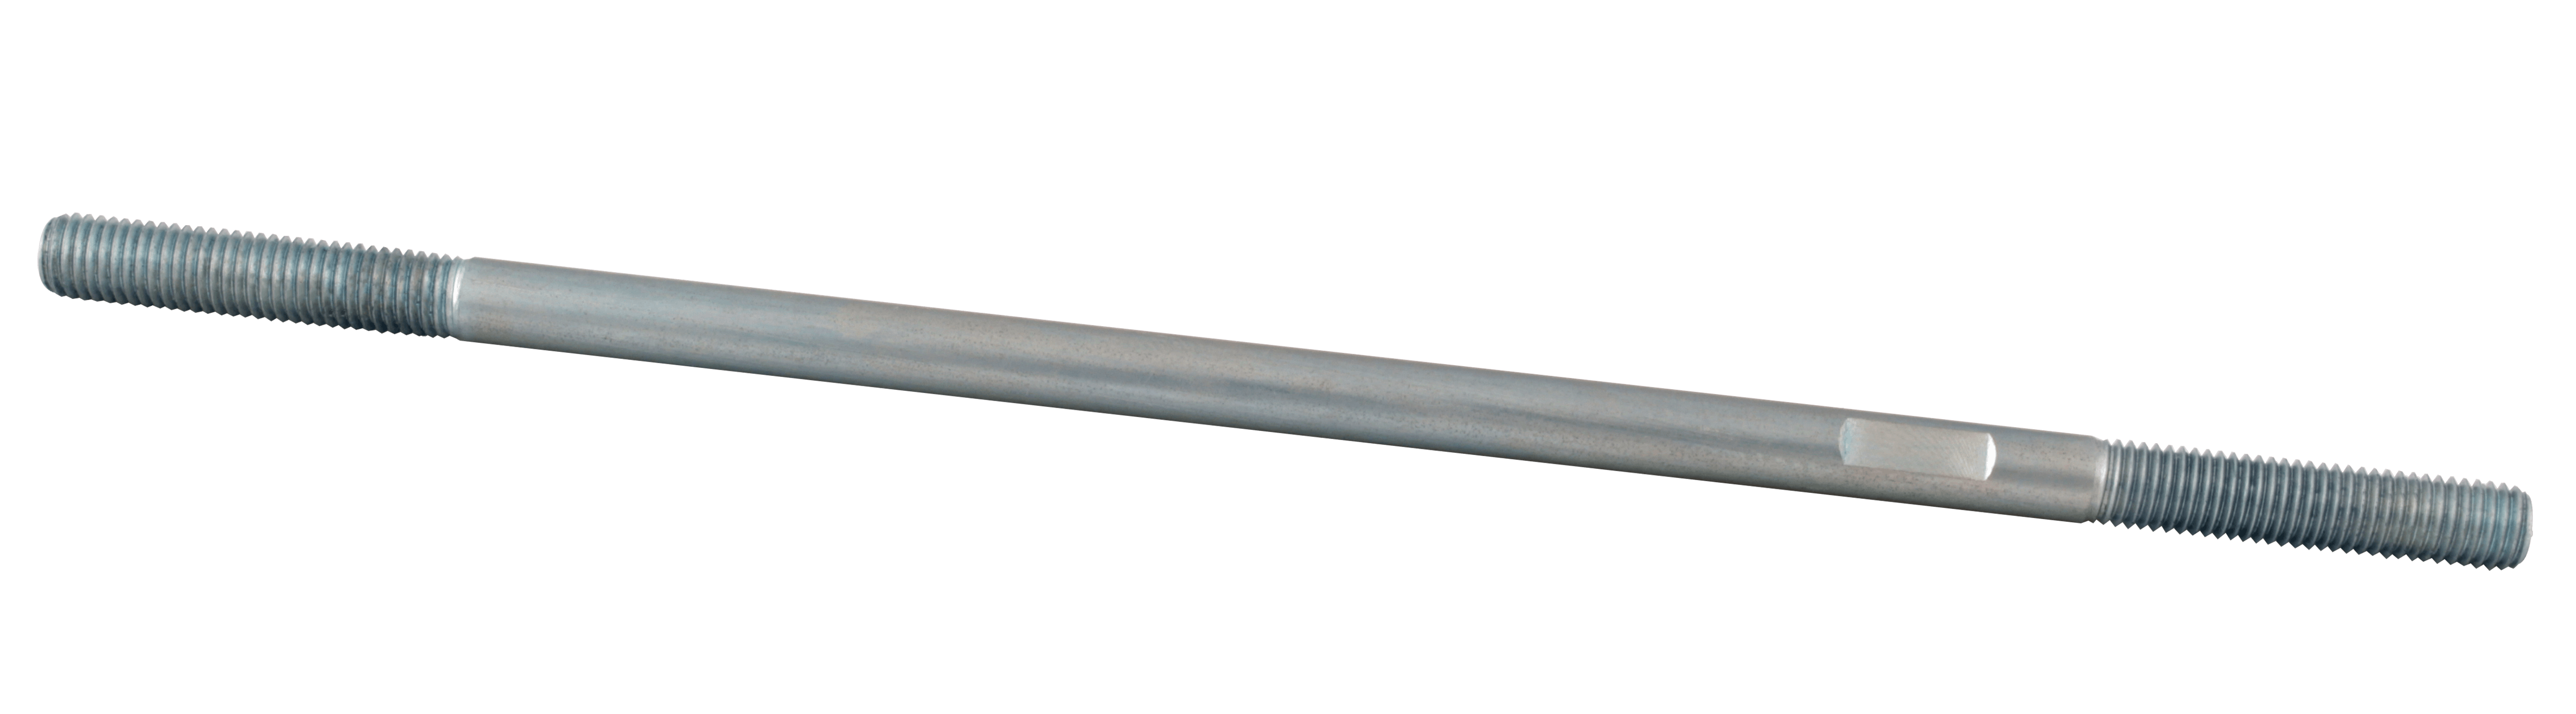 QA1 1698-117 Linkage Rod, Carbon Steel 5/16-24 - 5/16-24 X 4.5 inch inch Long